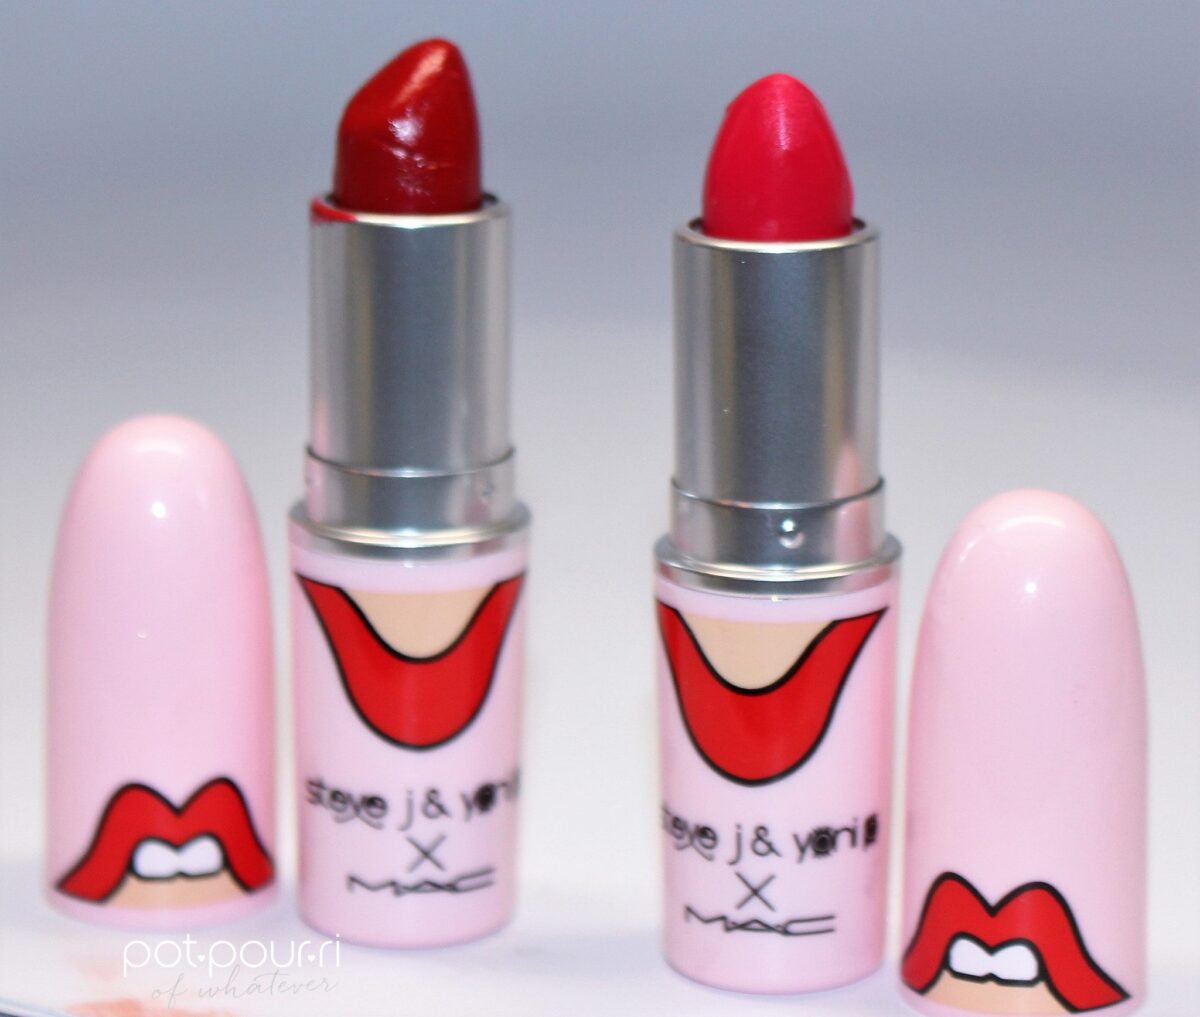 Mac-Steve-and-Yoni-lipsticks